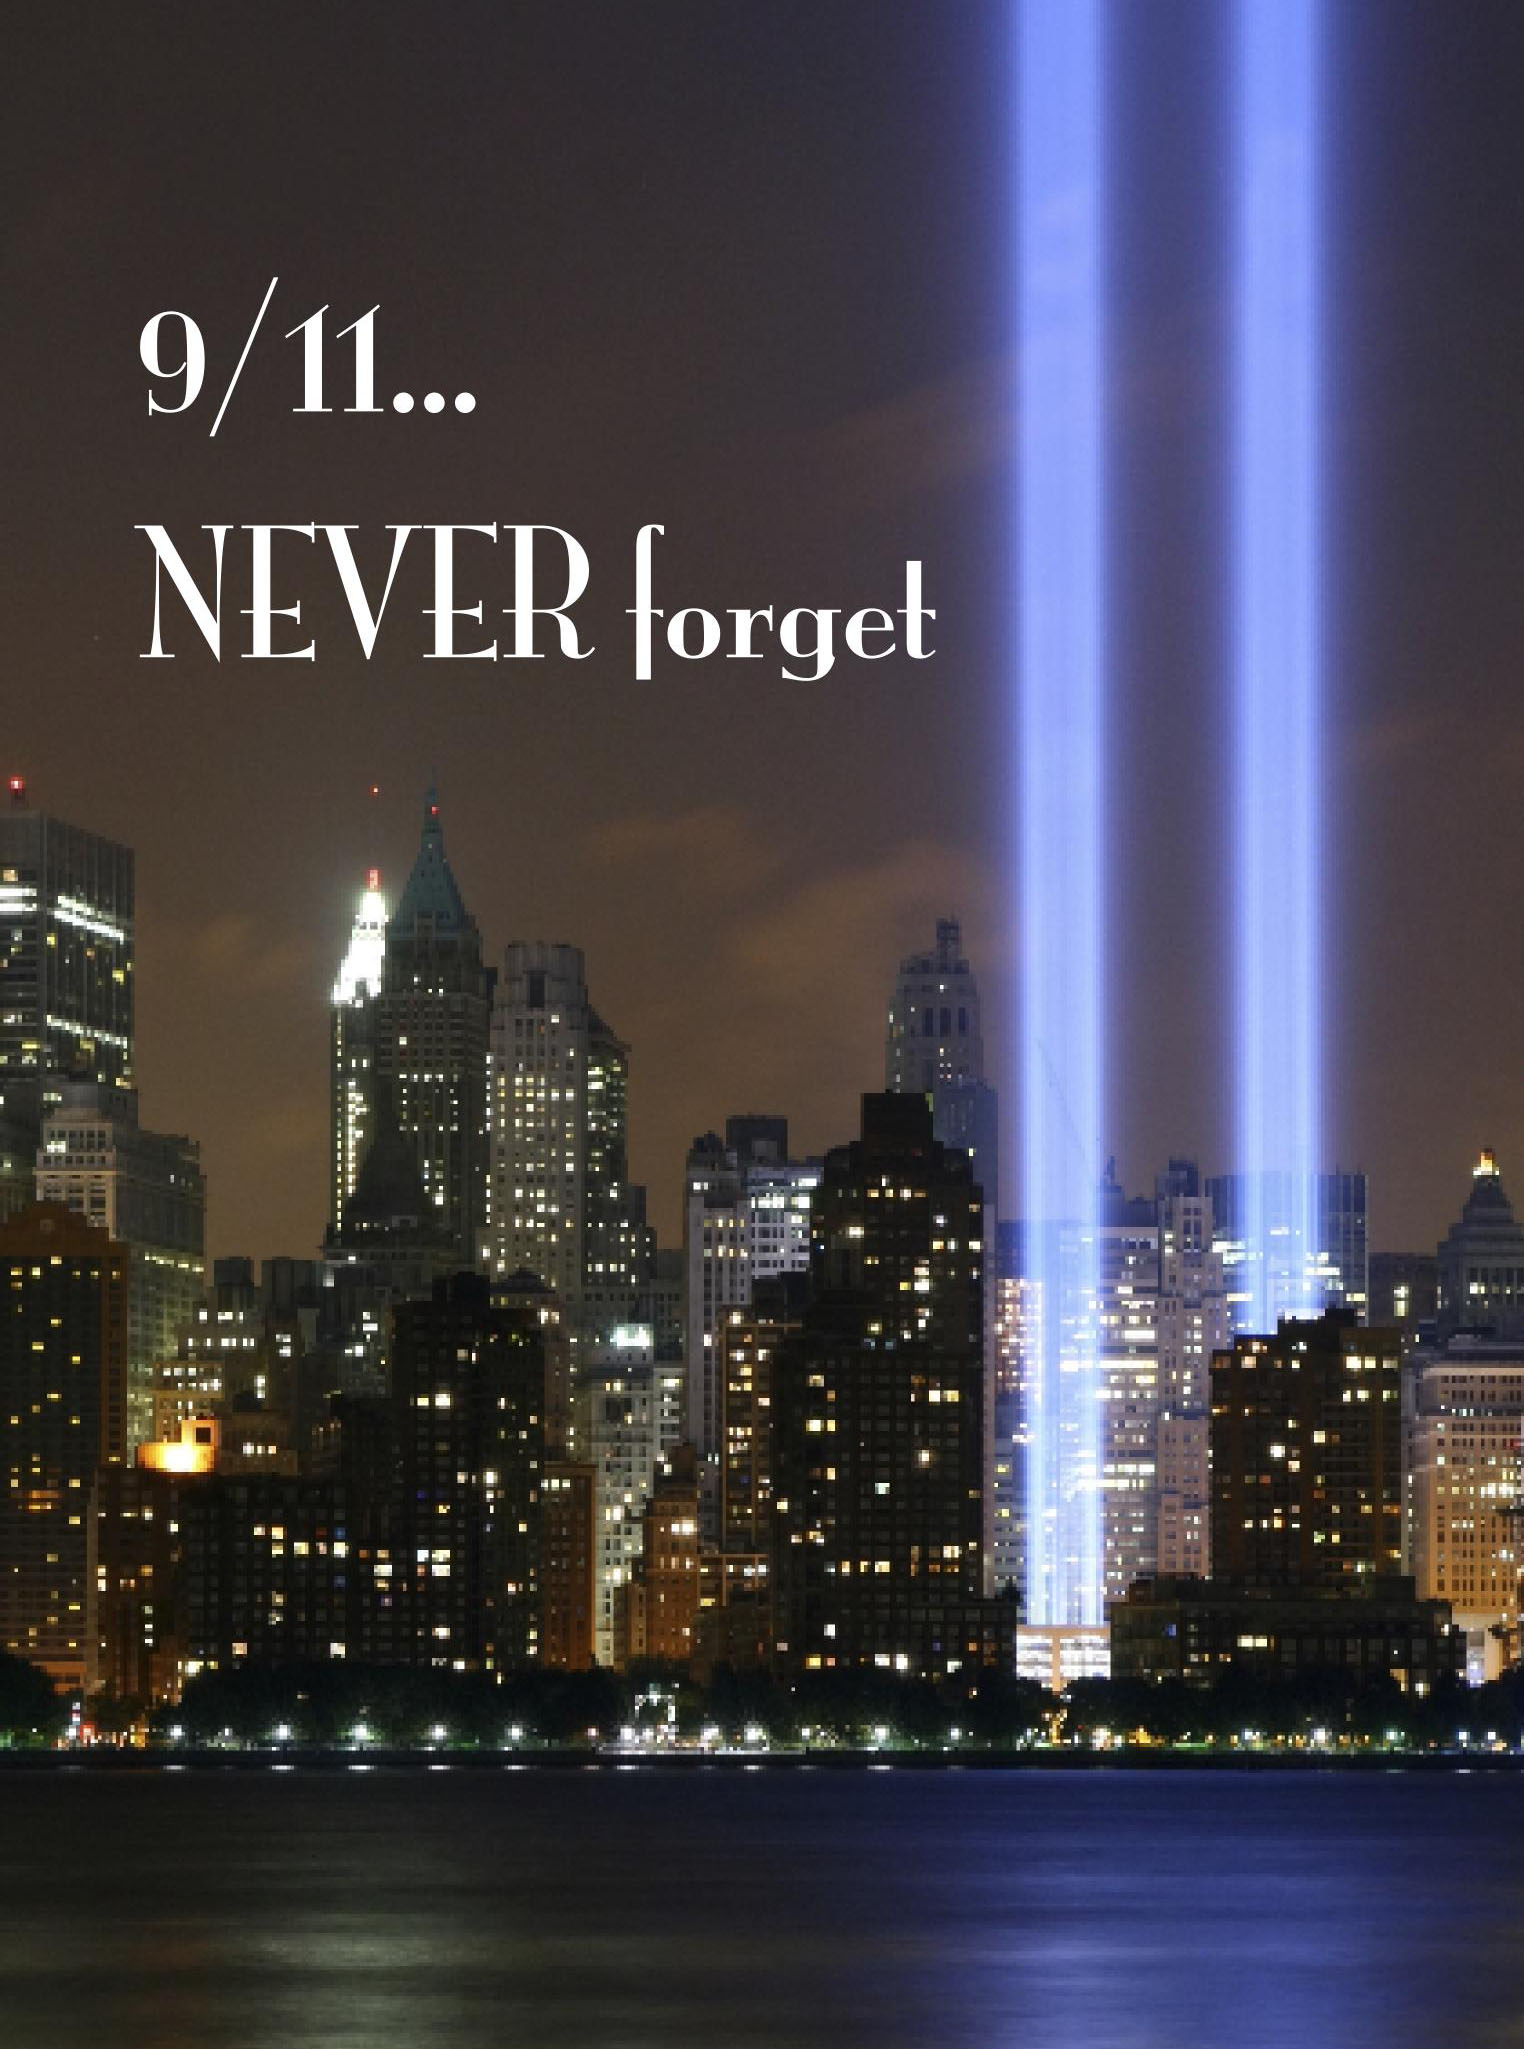 September 11 Never Forget Sep 11 2011 9 11 Never